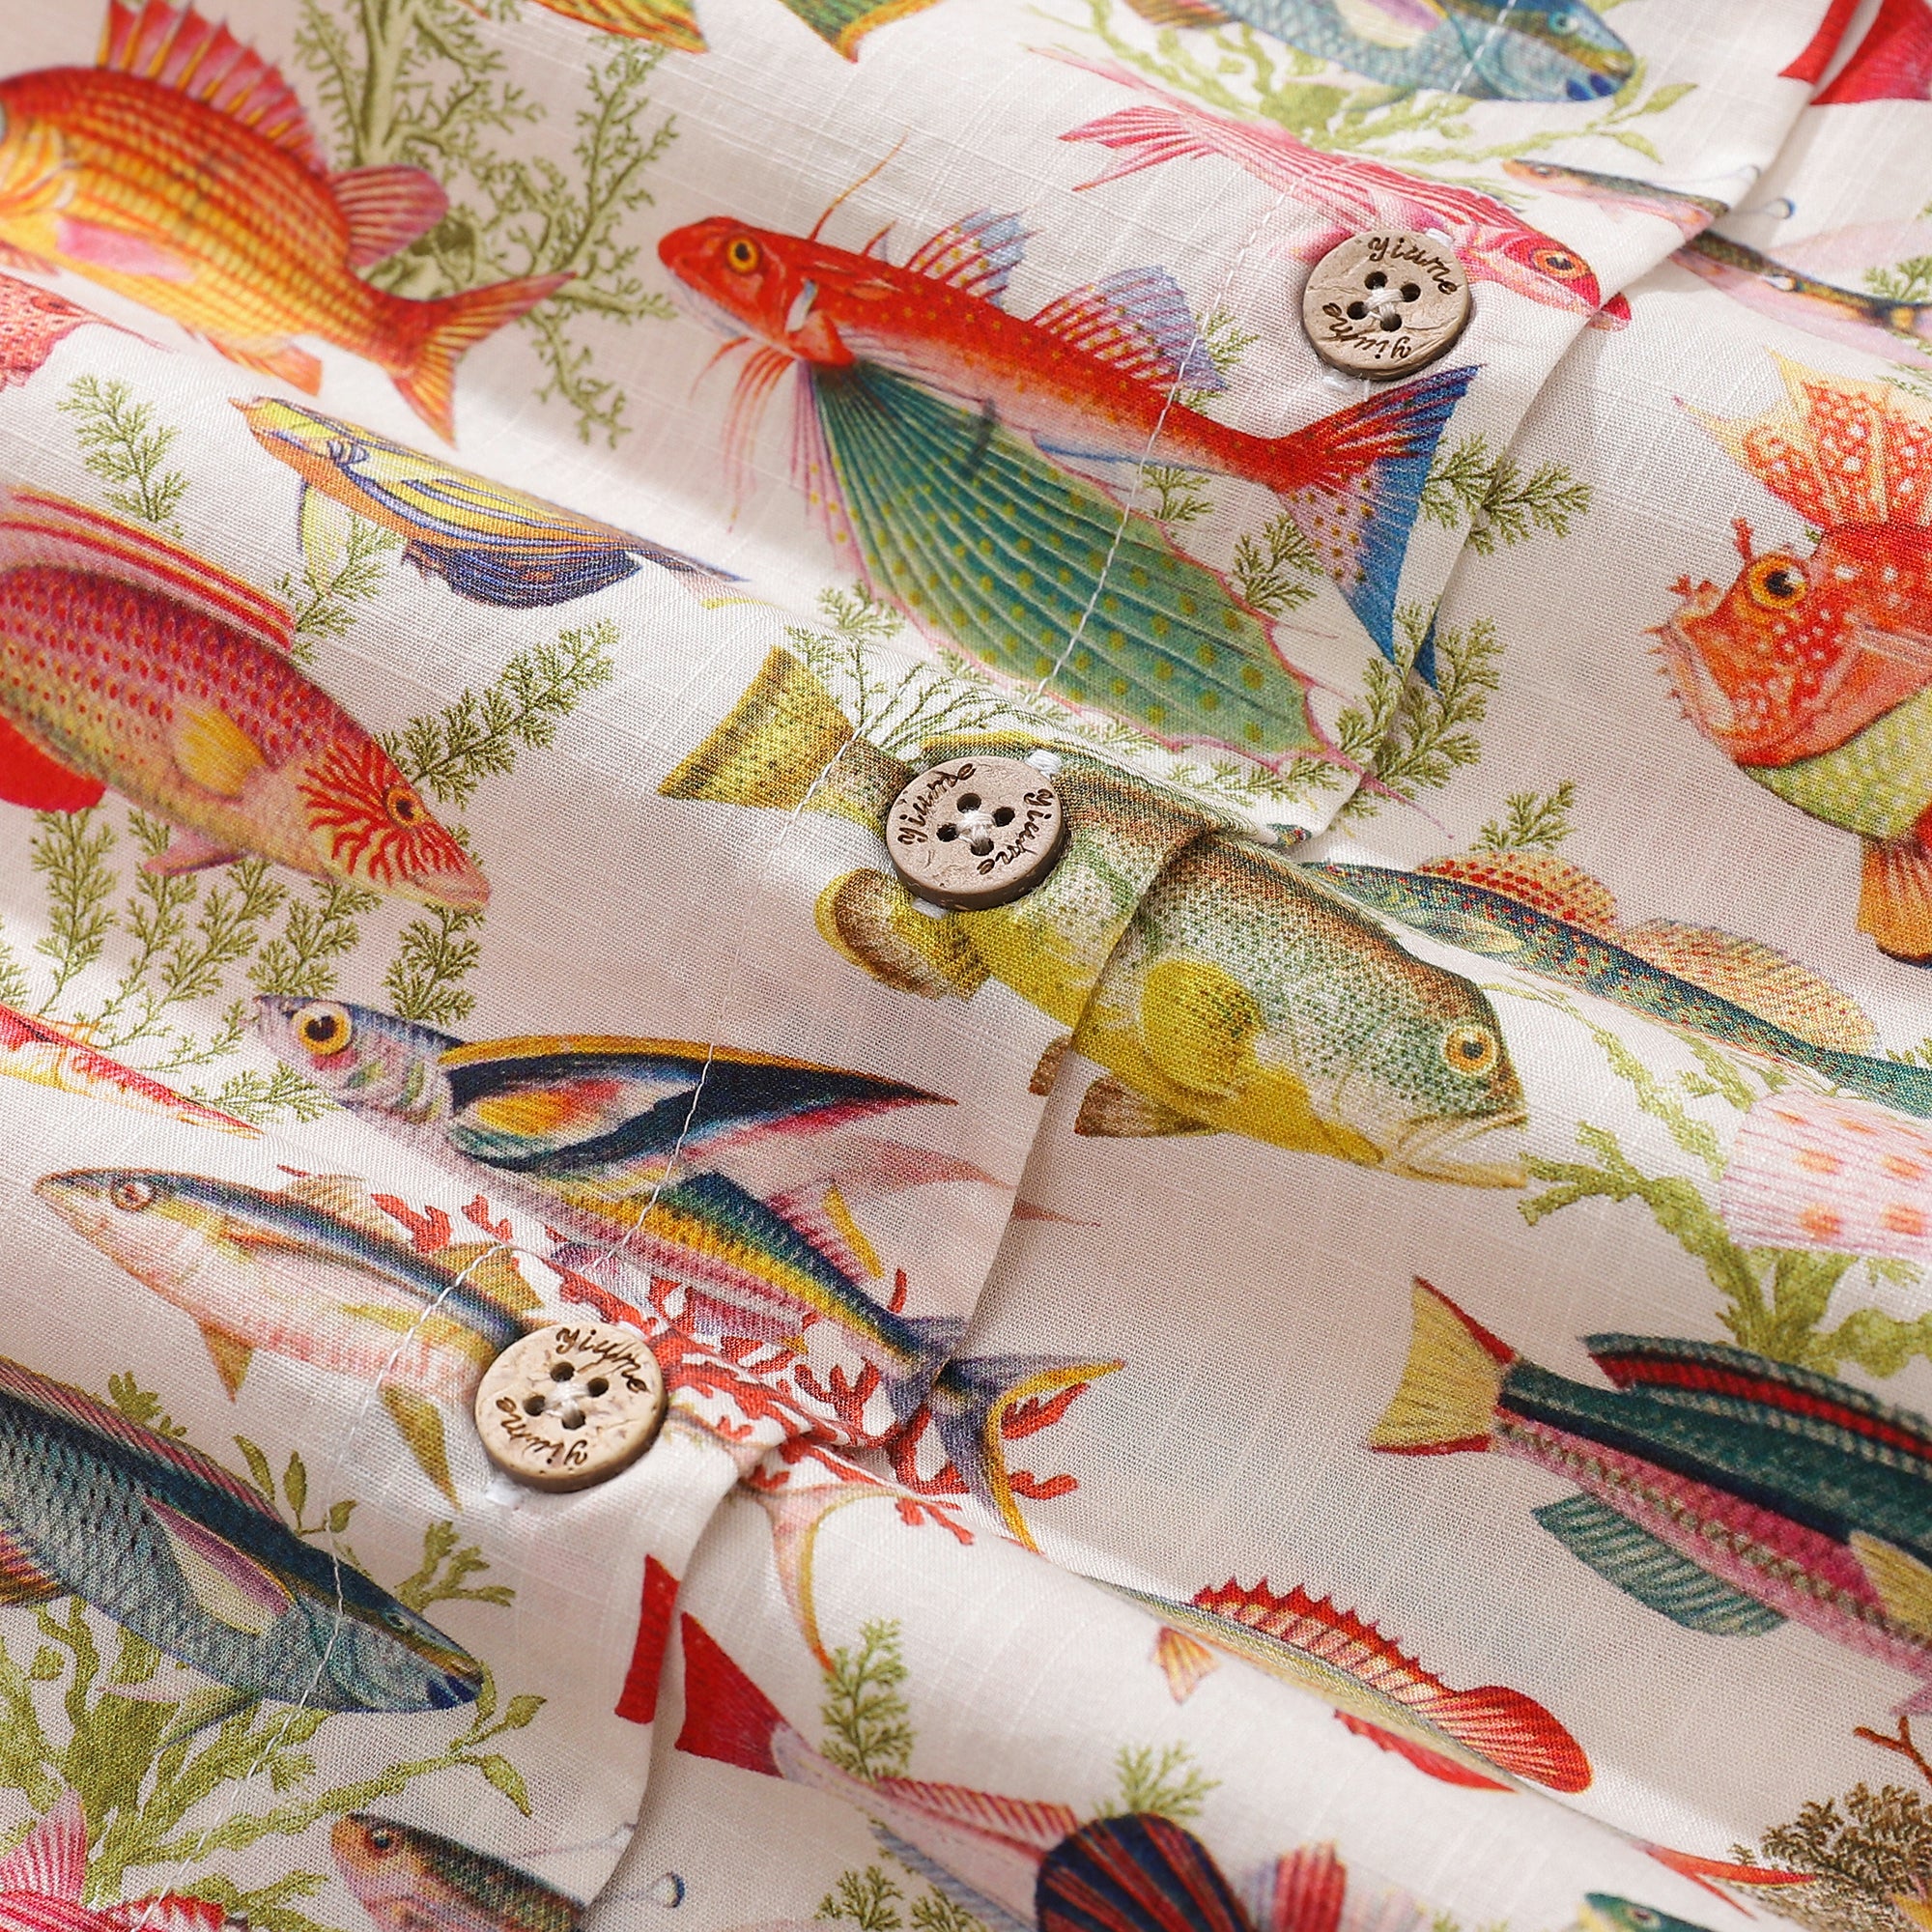 Women's Hawaiian Shirt Sea Ocean Fish Print Cotton Button-down Short Sleeve